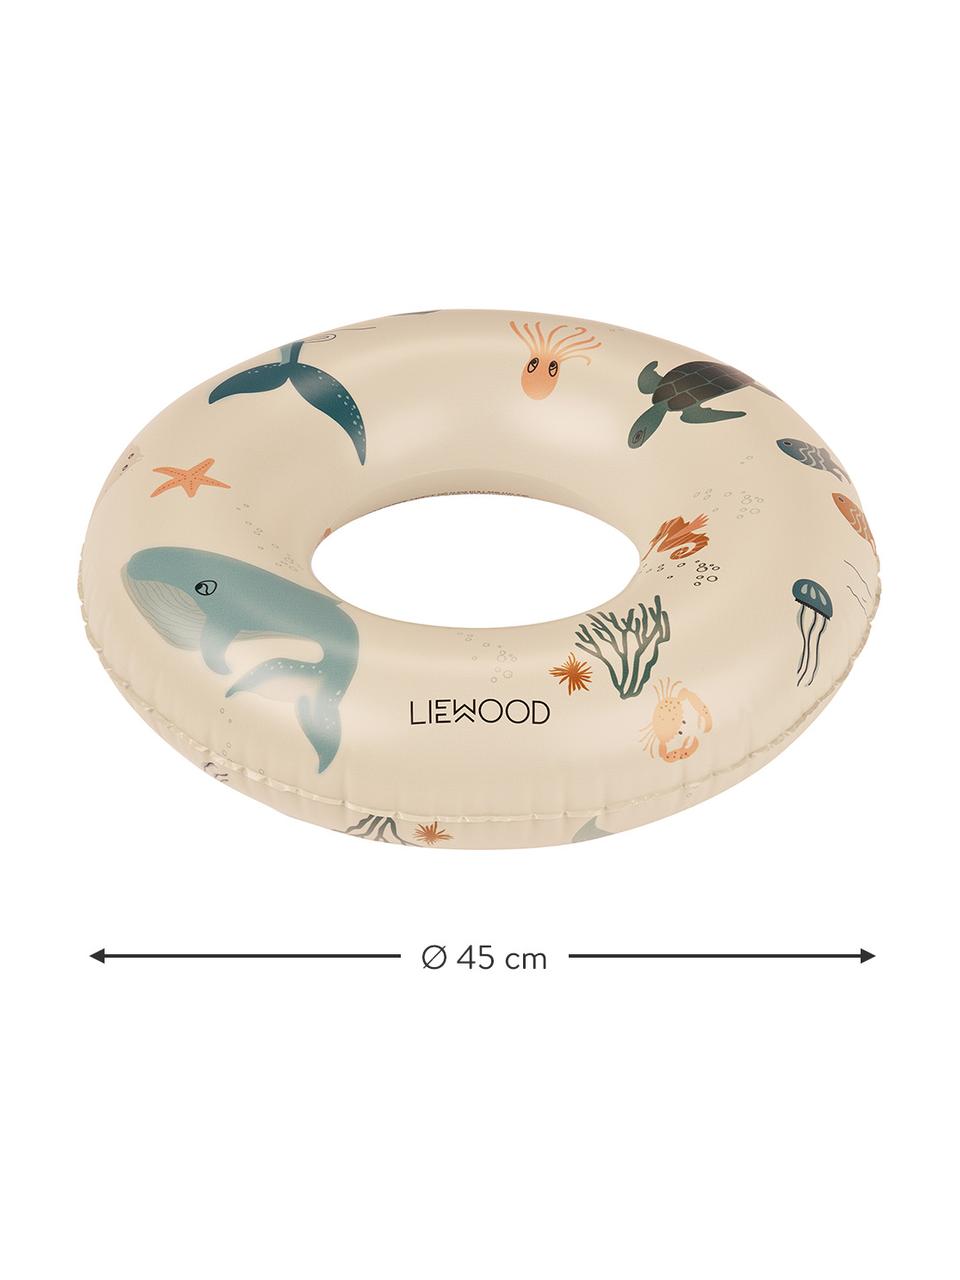 Kinderzwemring Baloo, 100% kunststof (PVC), Beige, multicolour (zeedieren patroon), Ø 45 cm